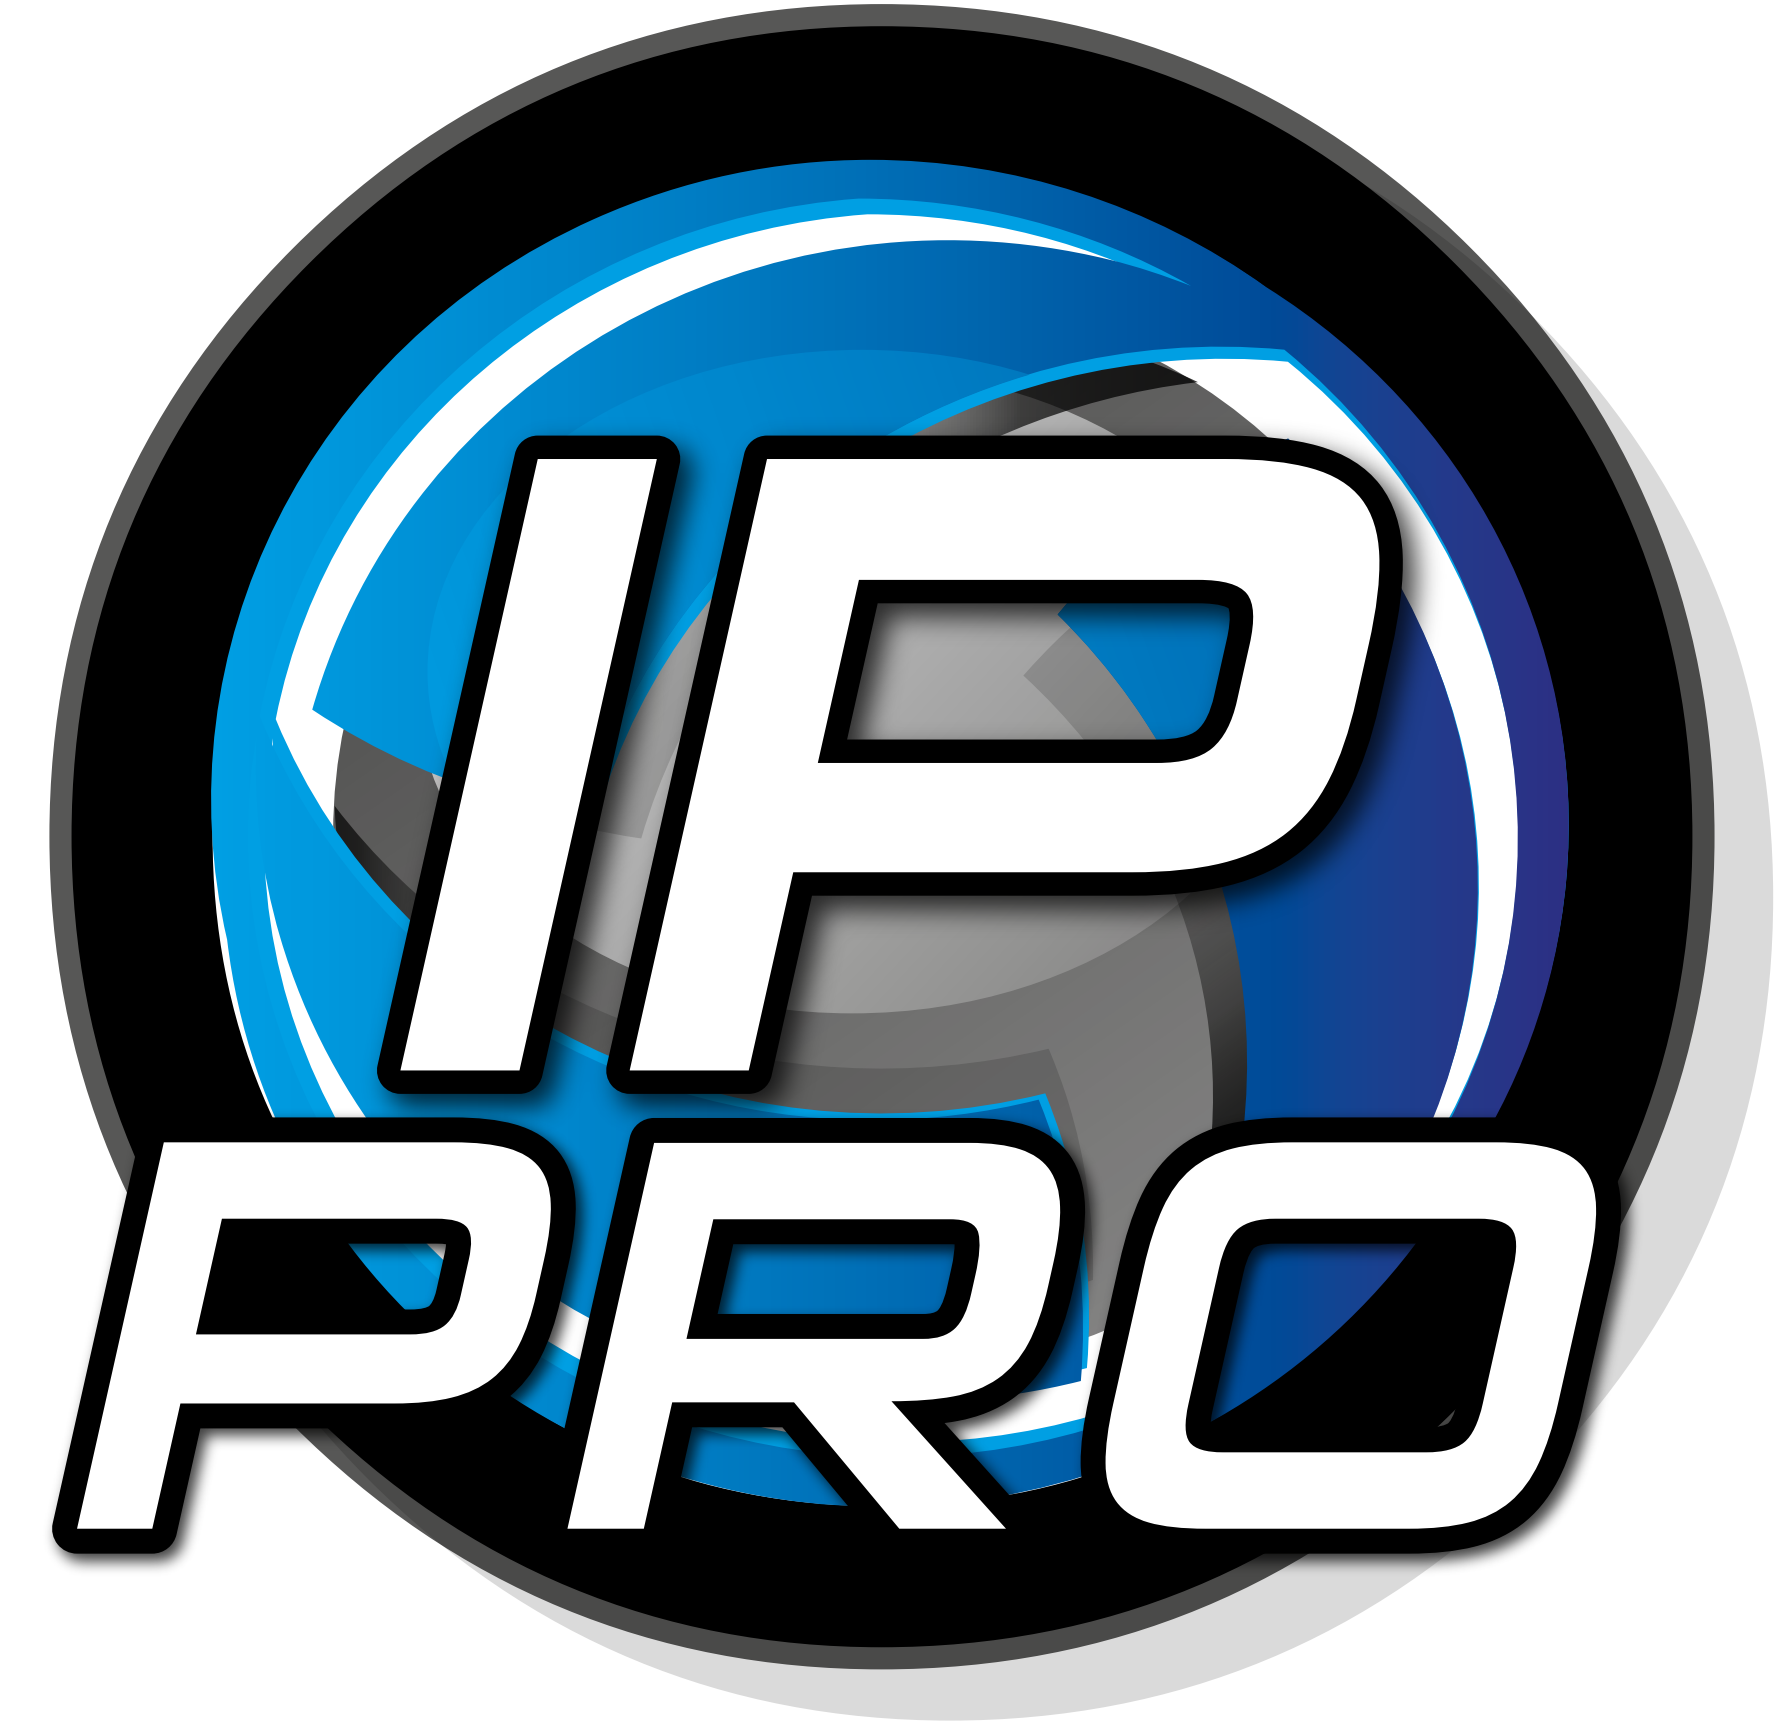 IP PRO Technologies